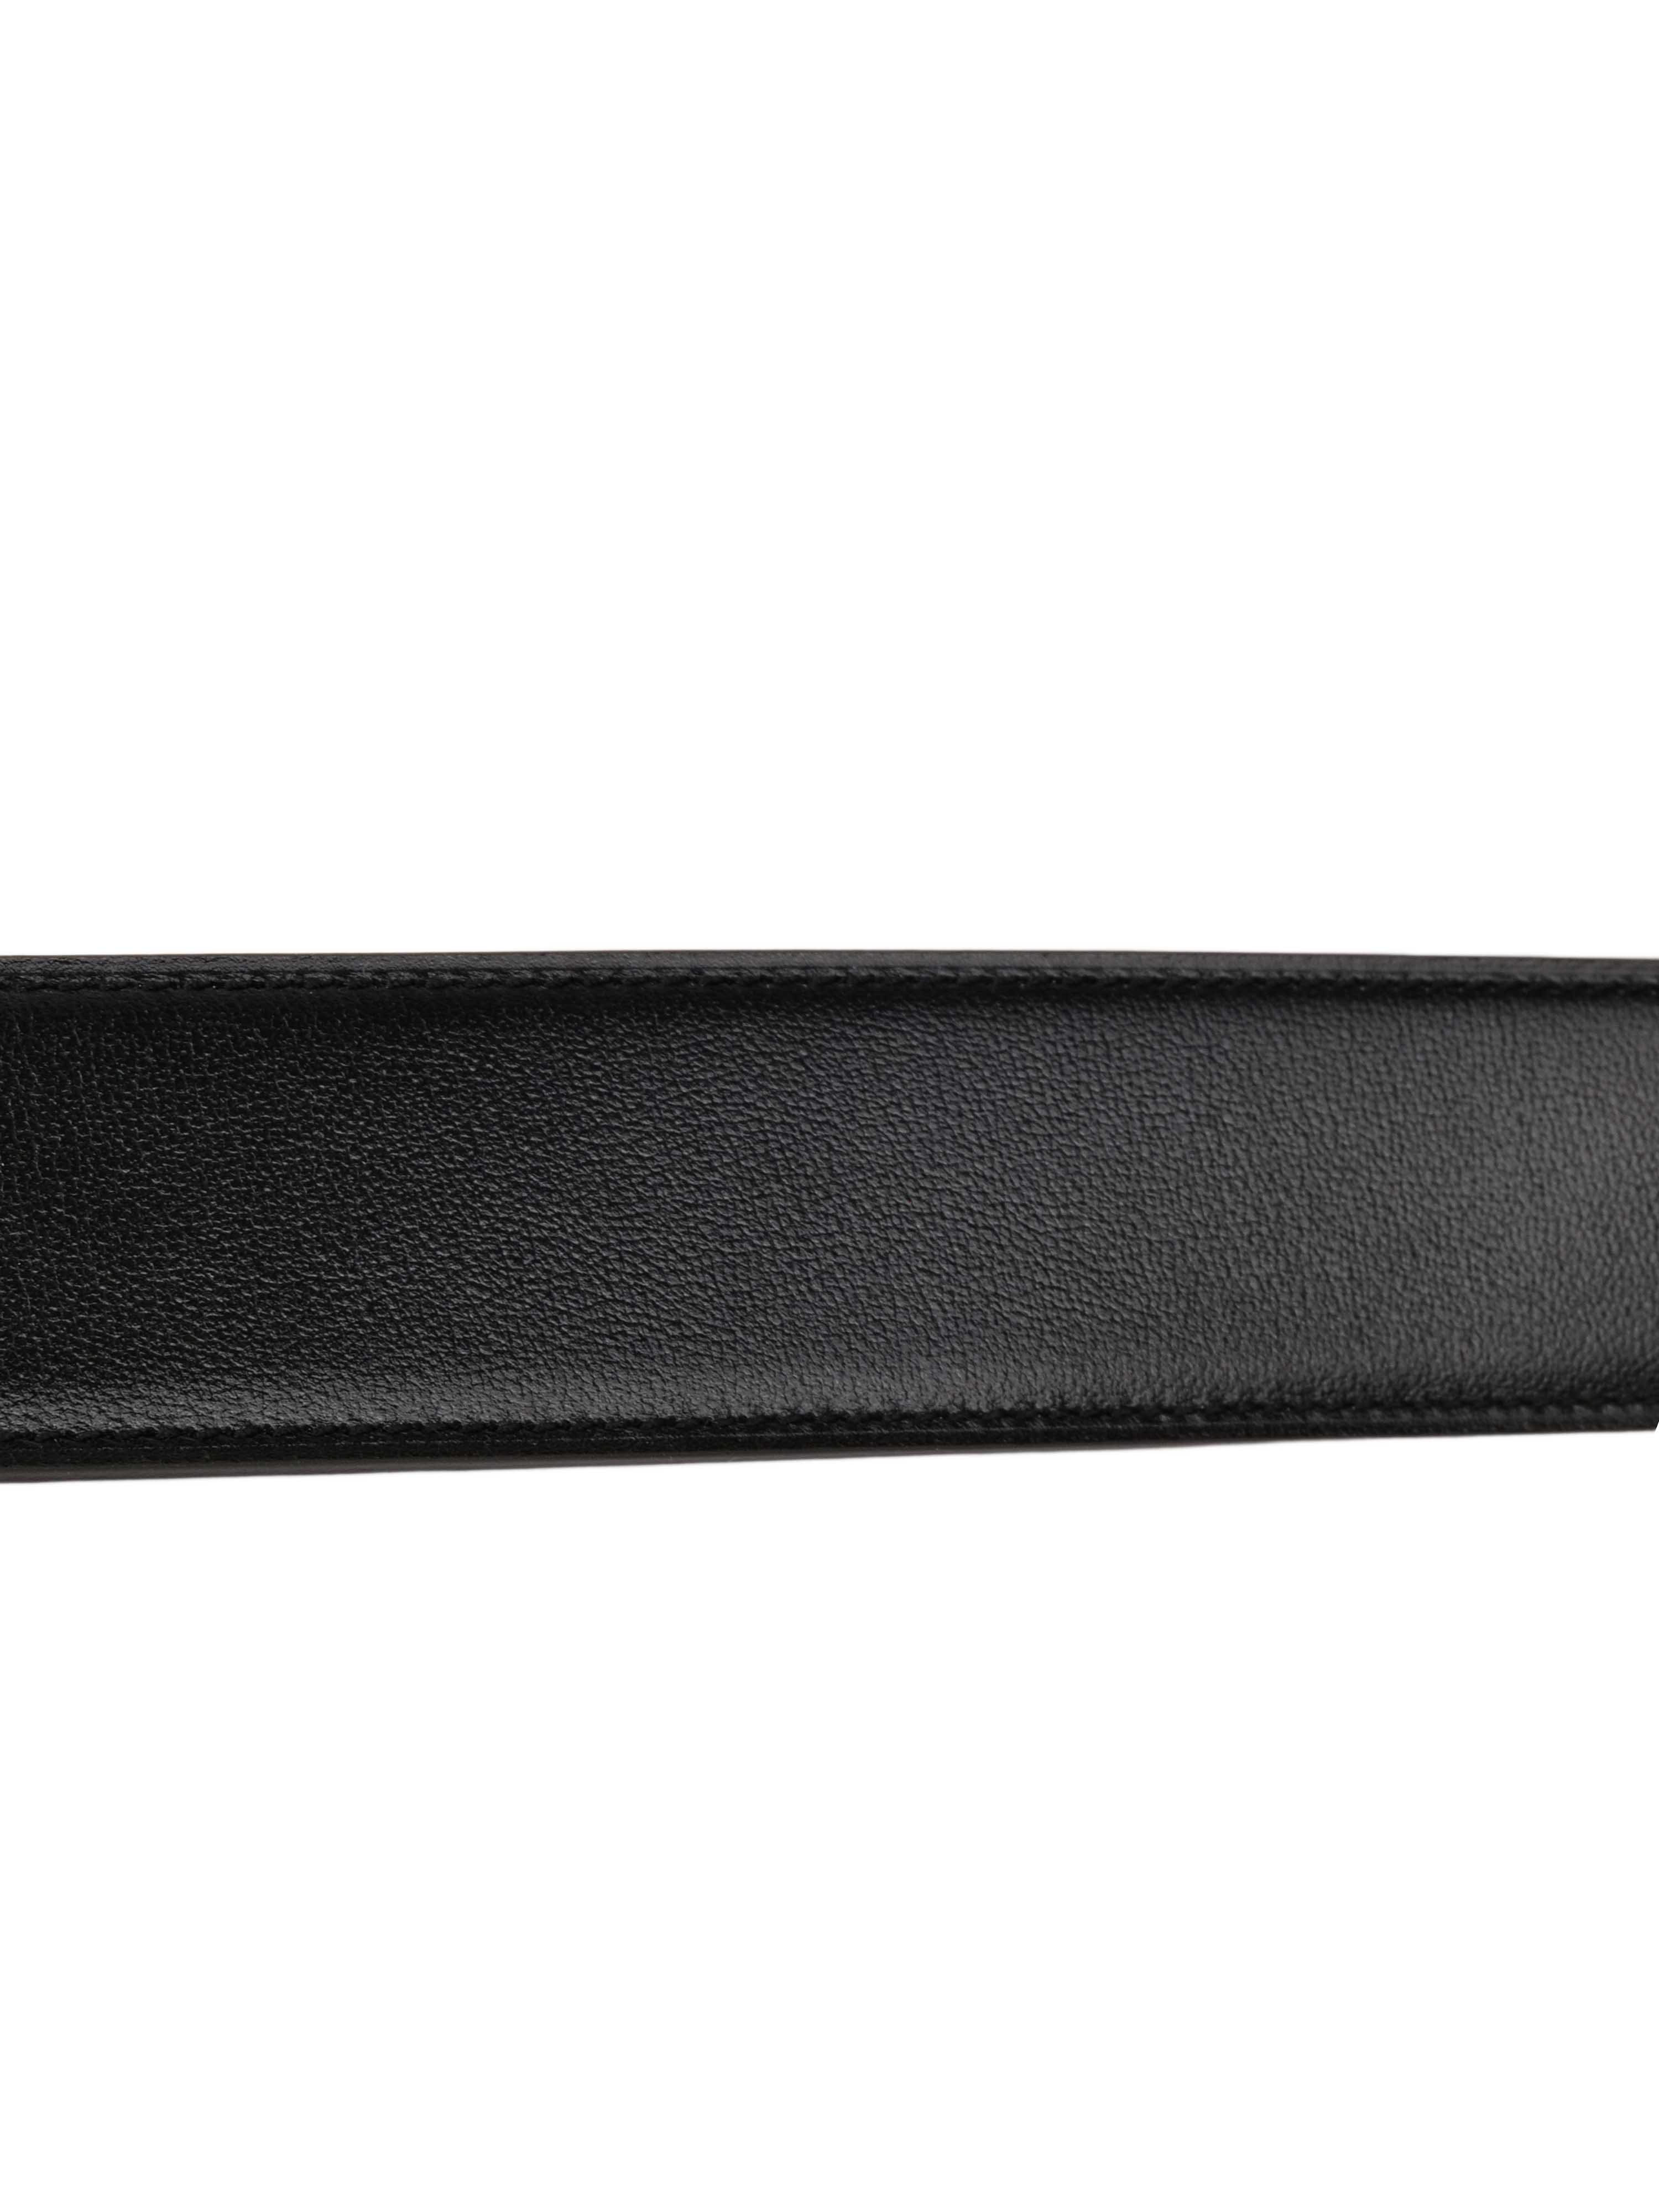 H Belt Buckle & Reversible Leather Strap.